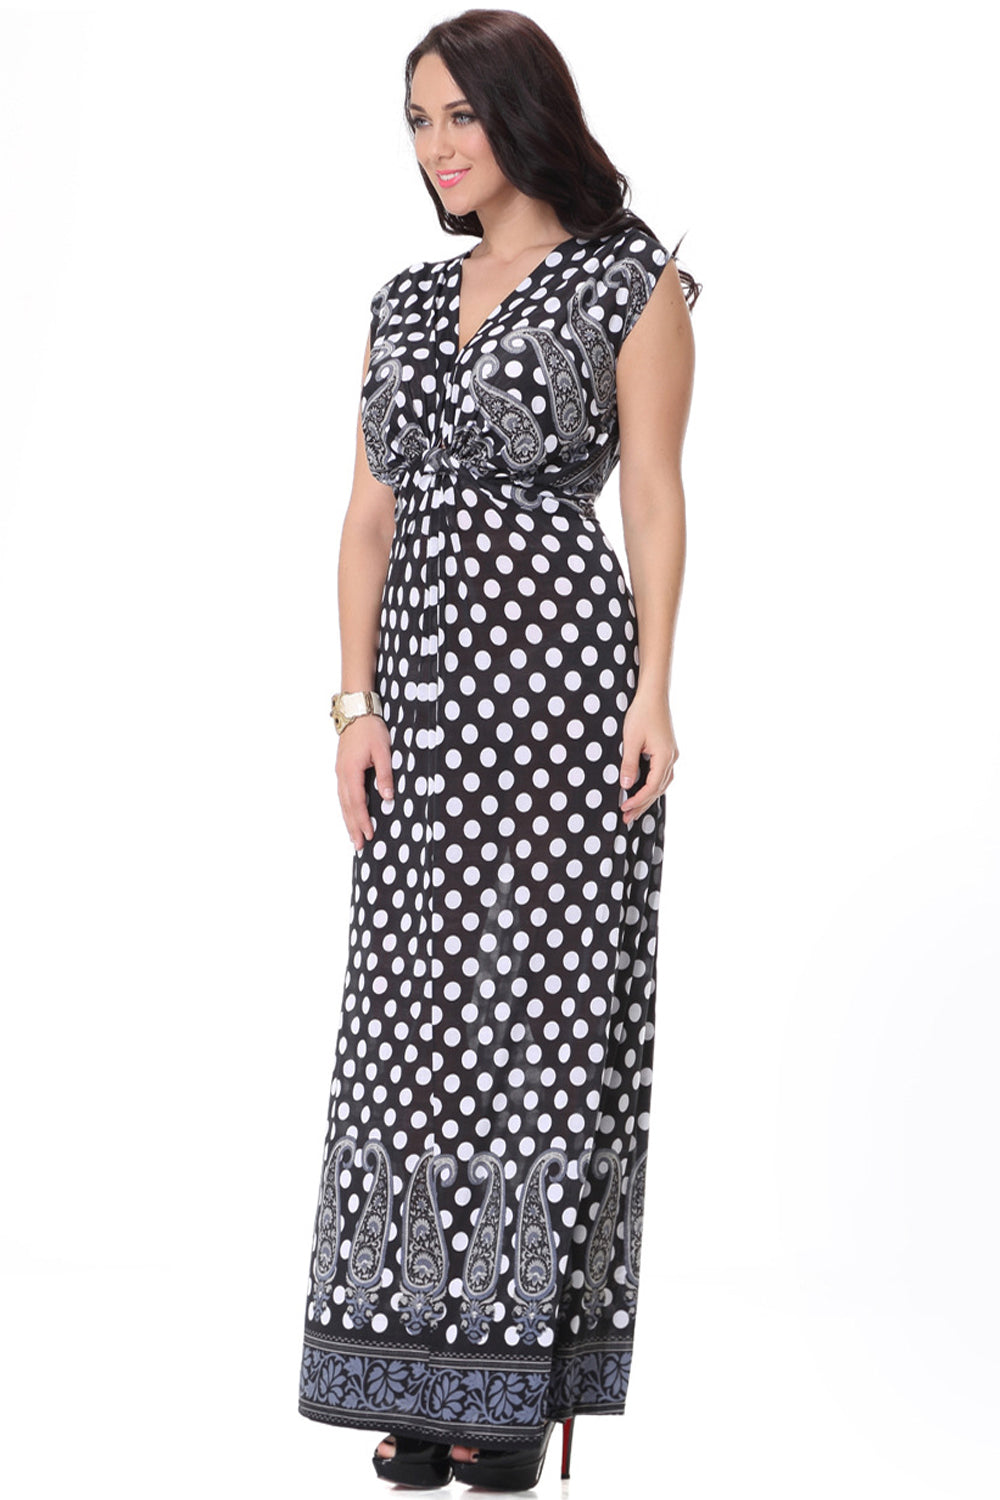 Ketty More Women Plus Size Polka Dots Sleeveless Long Dress-KMWD395